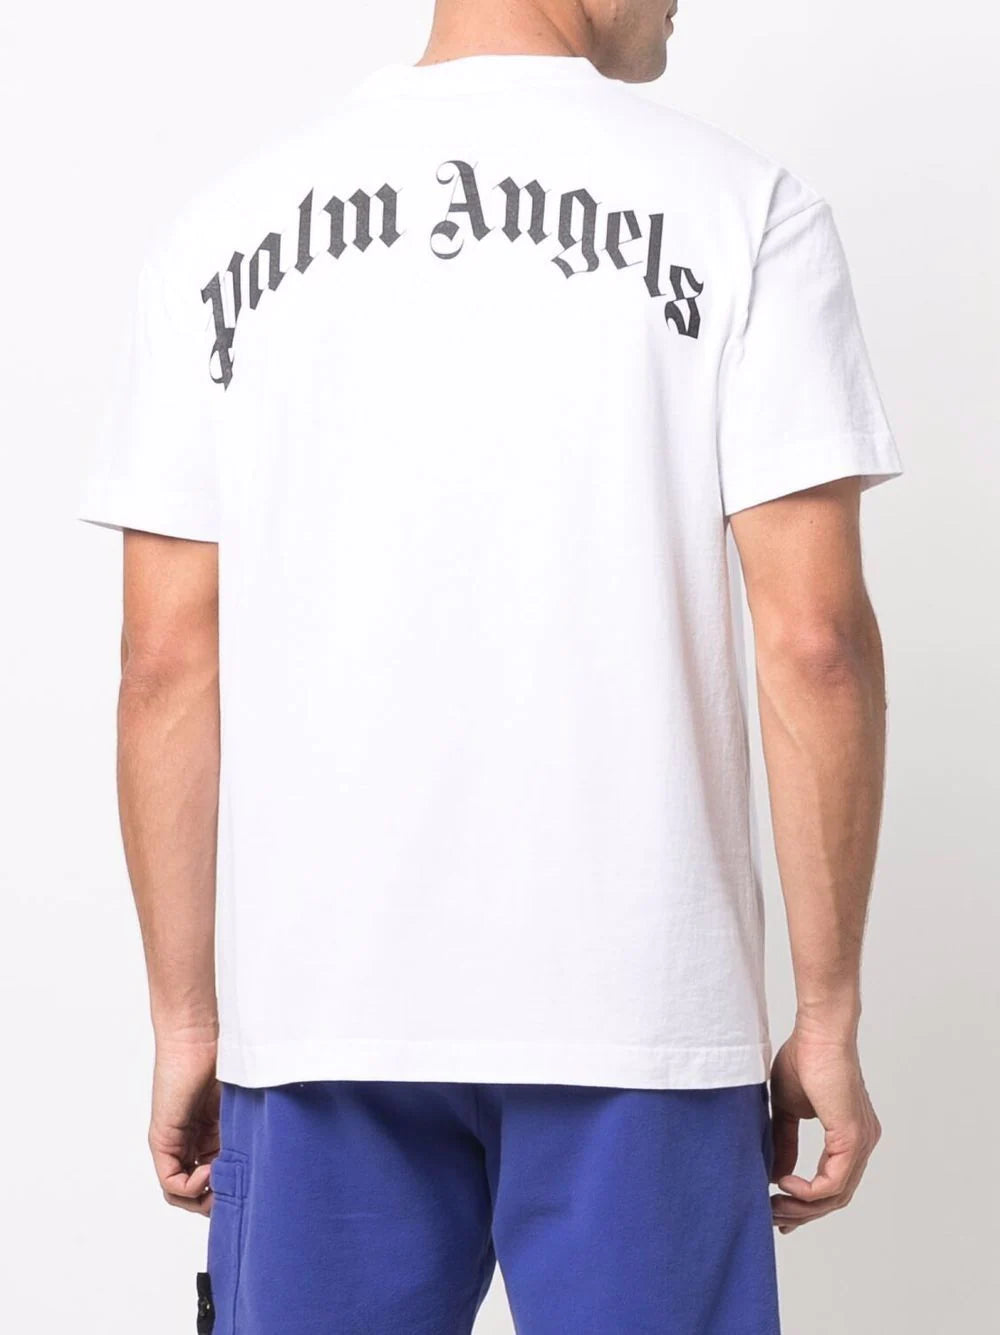 Palm Angels White Bear-Print T-Shirt